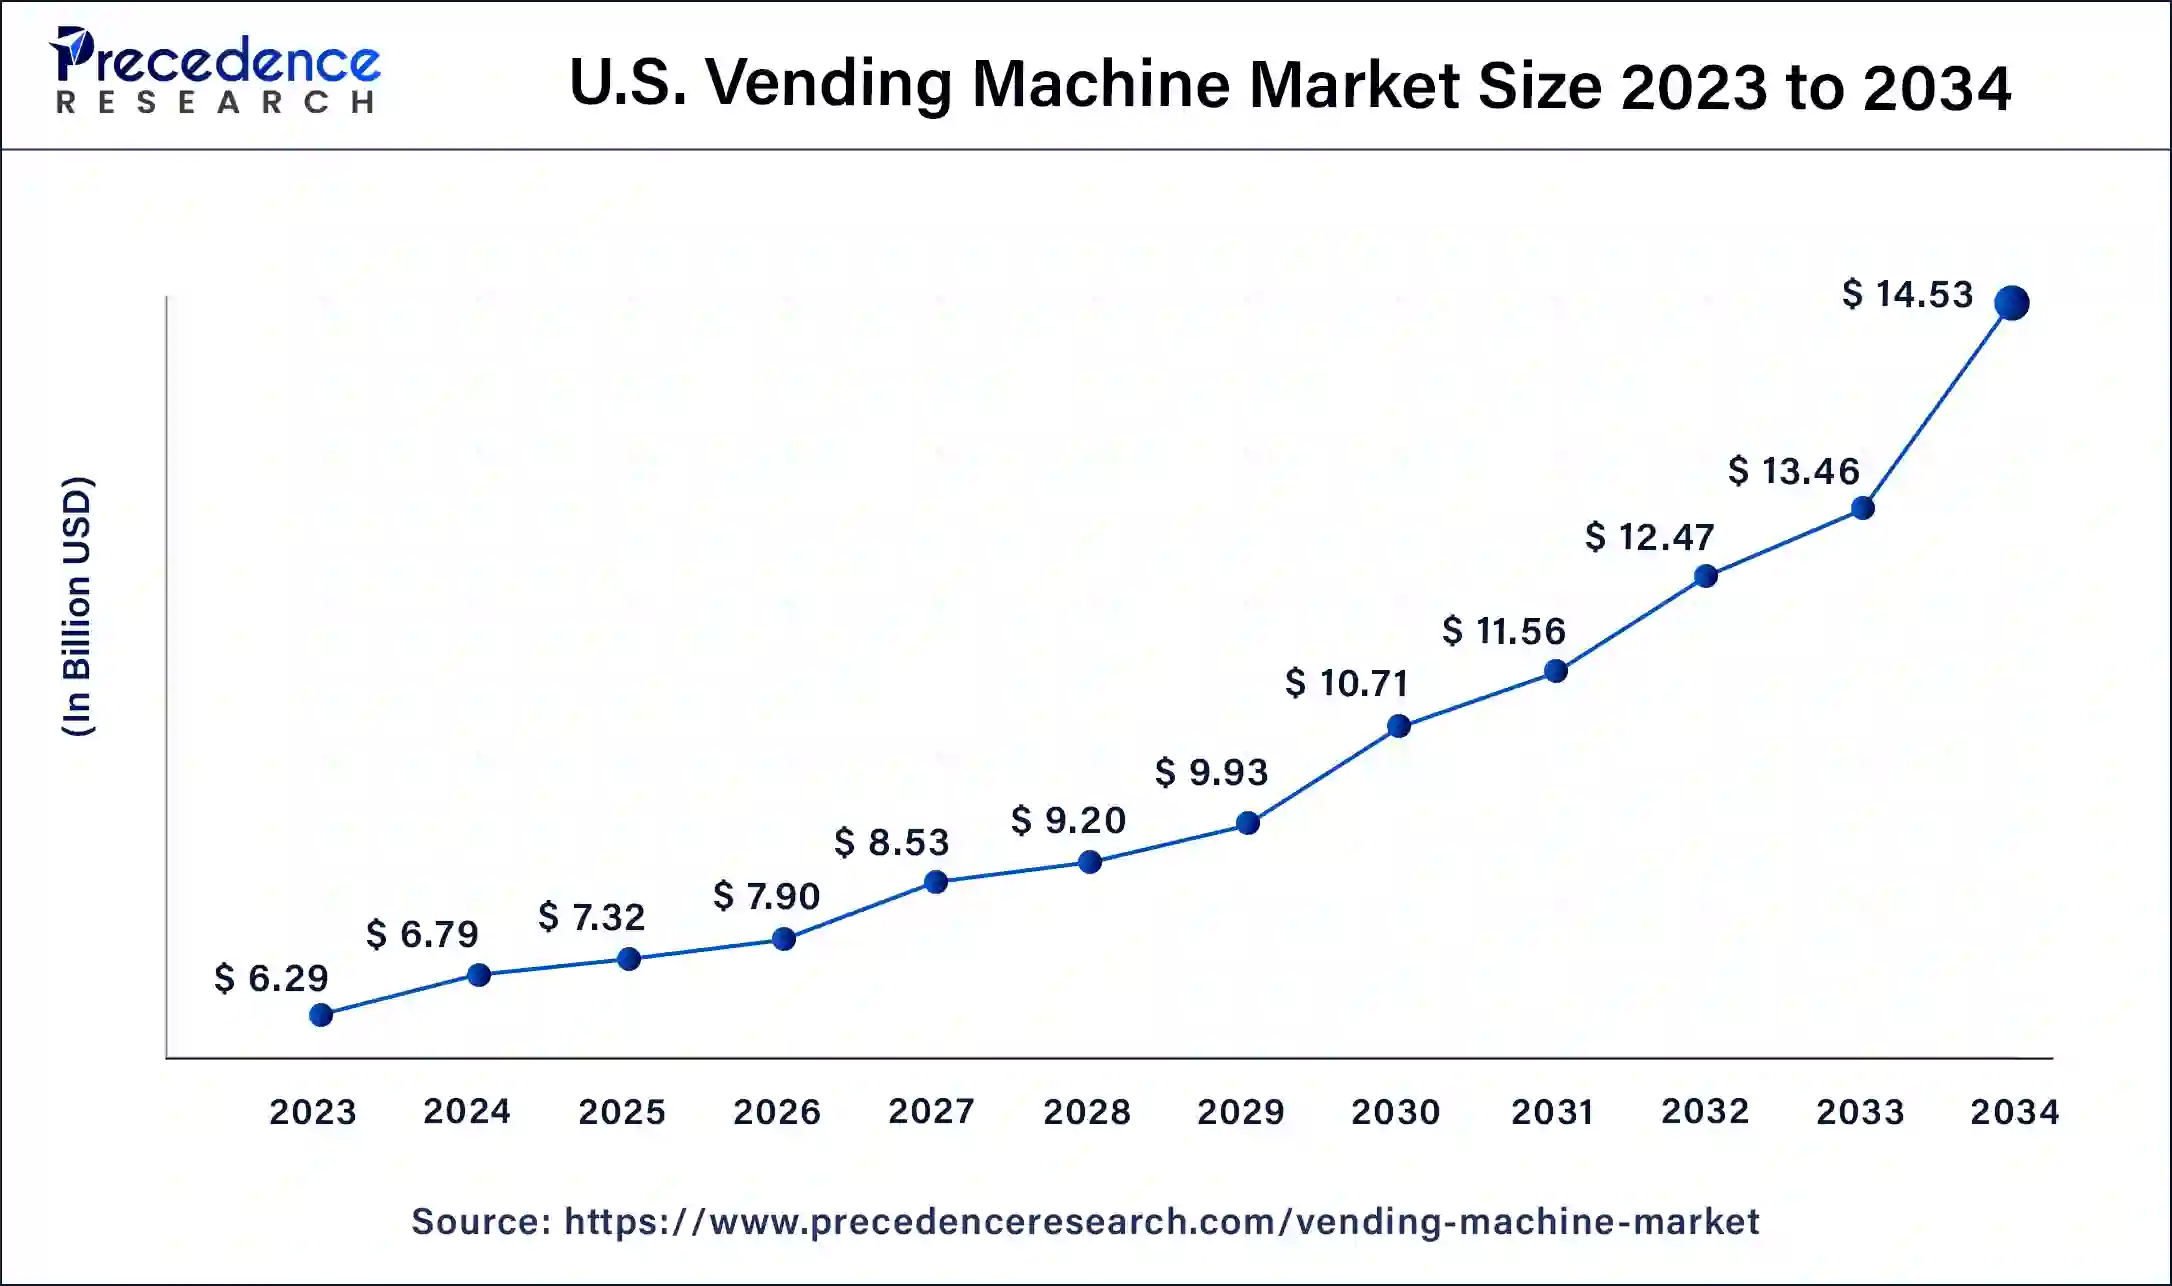 U.S. Vending Machine Market Size 2024 to 2034